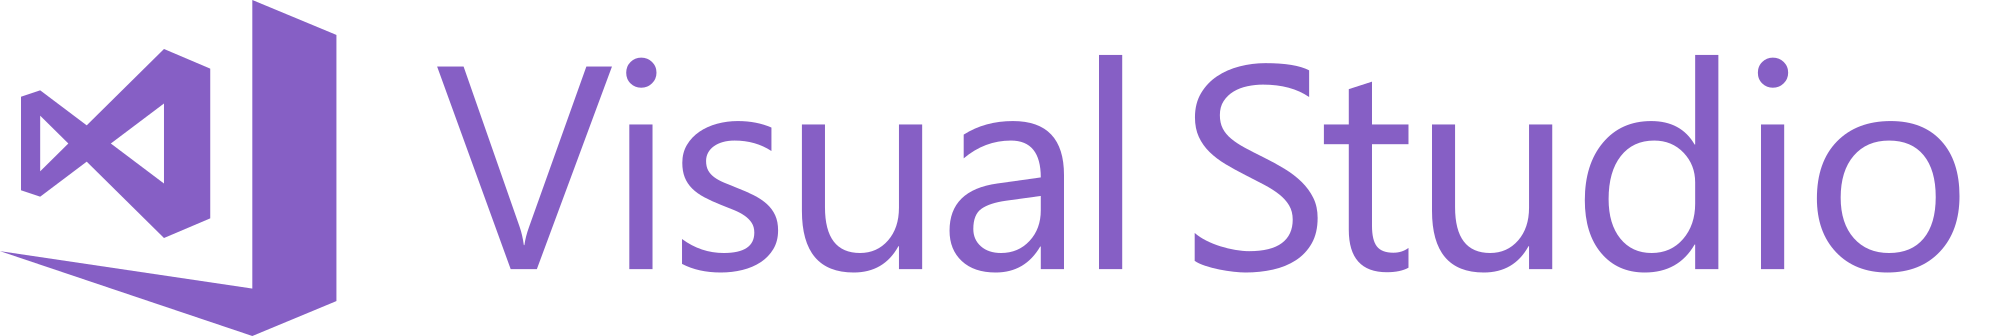 Visual Studio Logo - File:Visual Studio 2017 logo and wordmark.svg - Wikimedia Commons